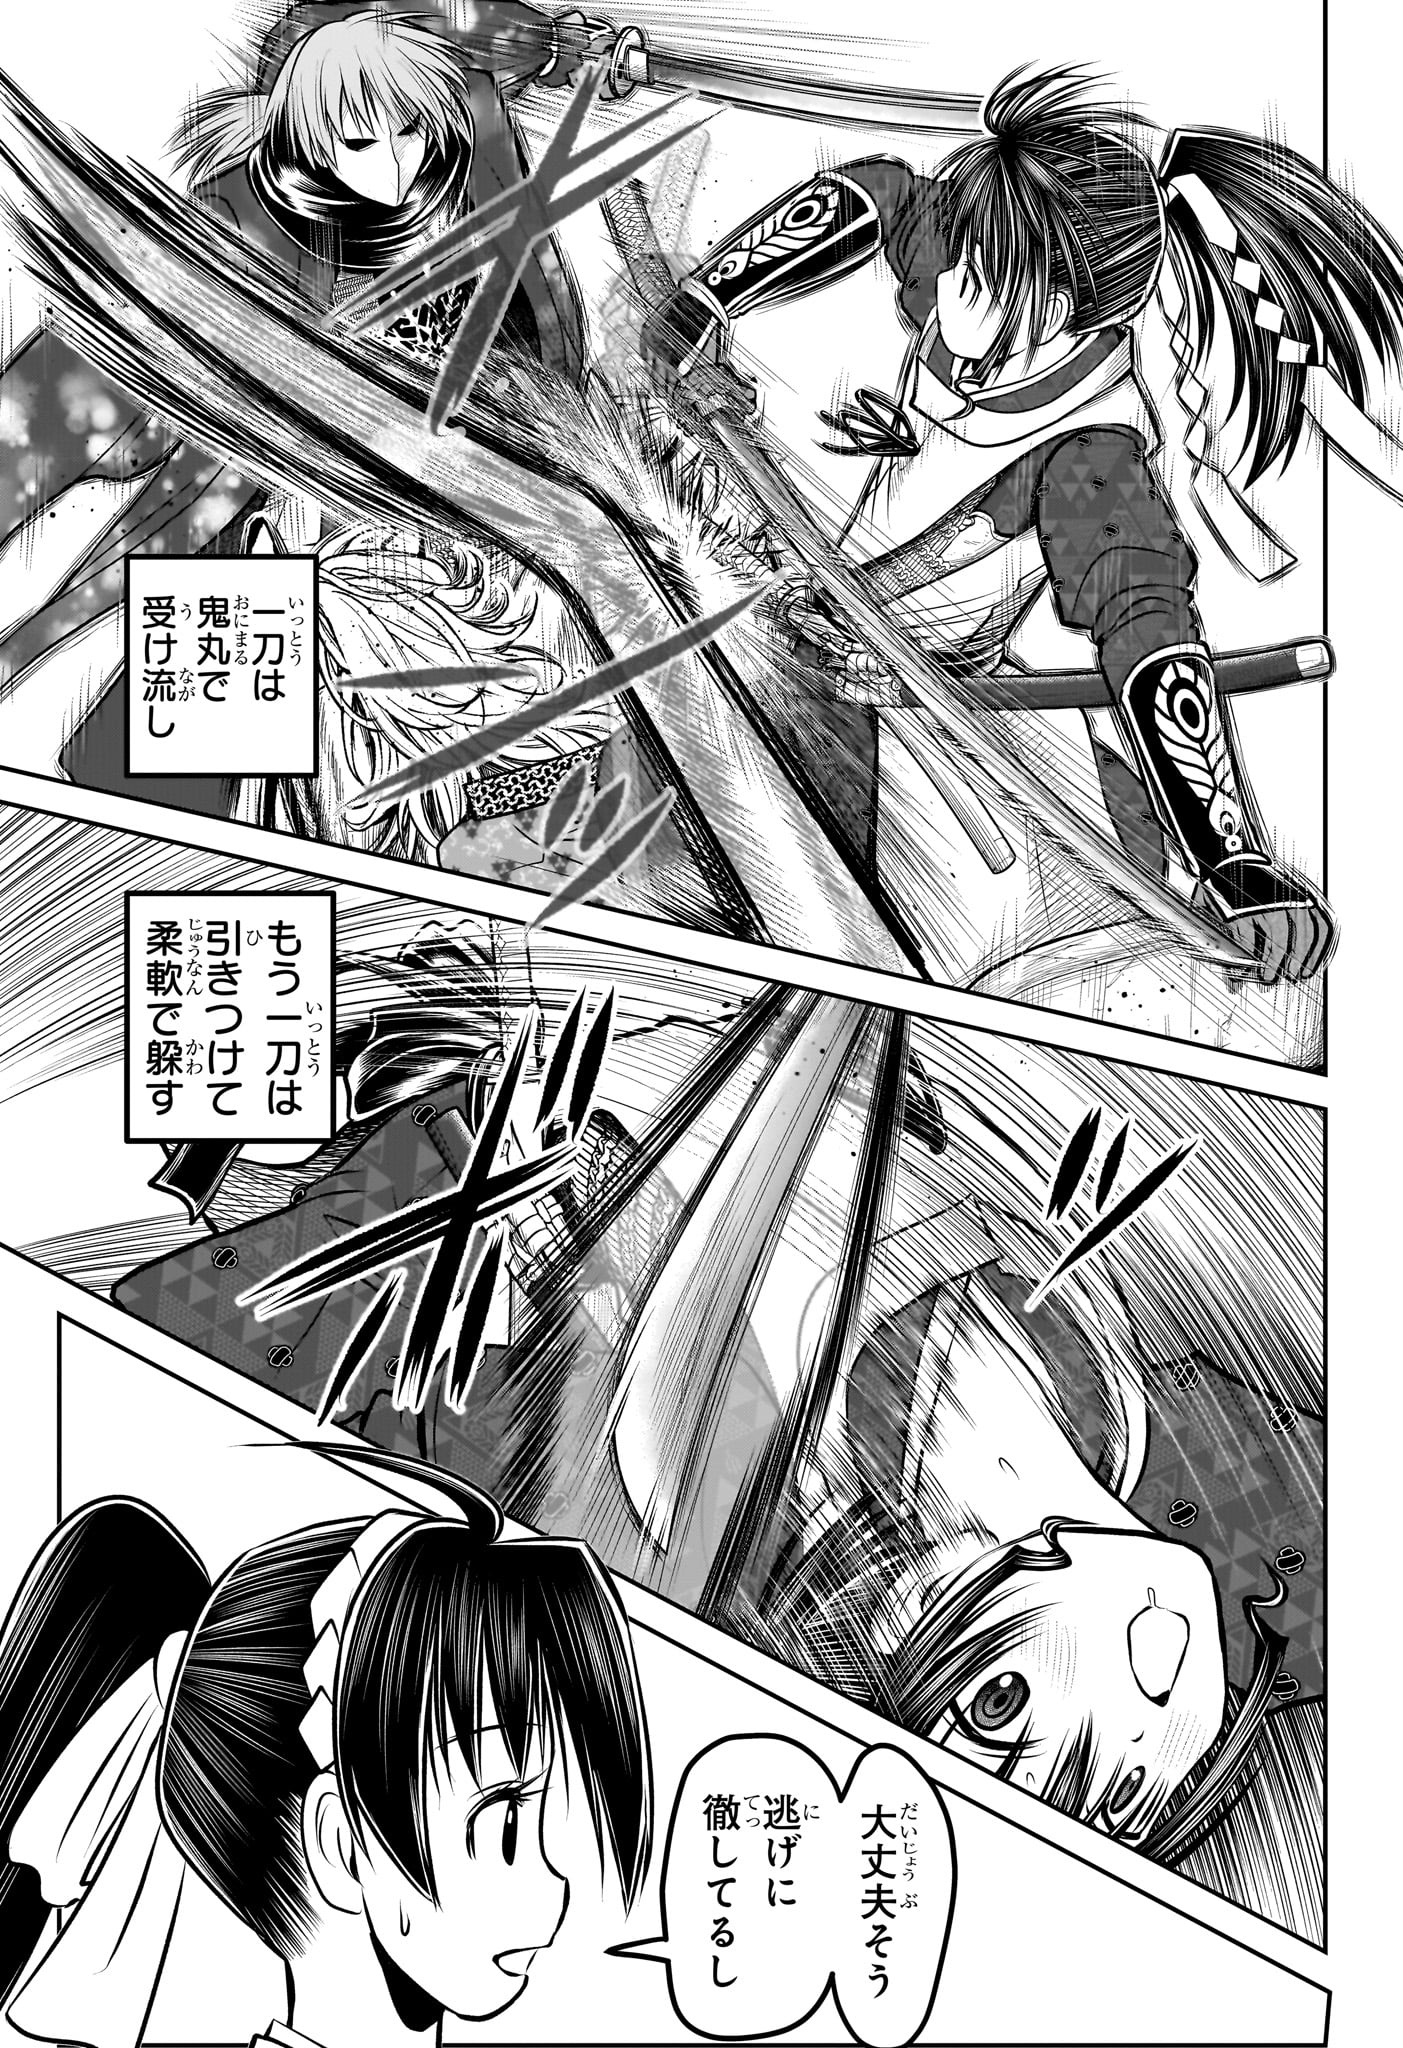 Nige Jouzu no Wakagimi - Chapter 160 - Page 7